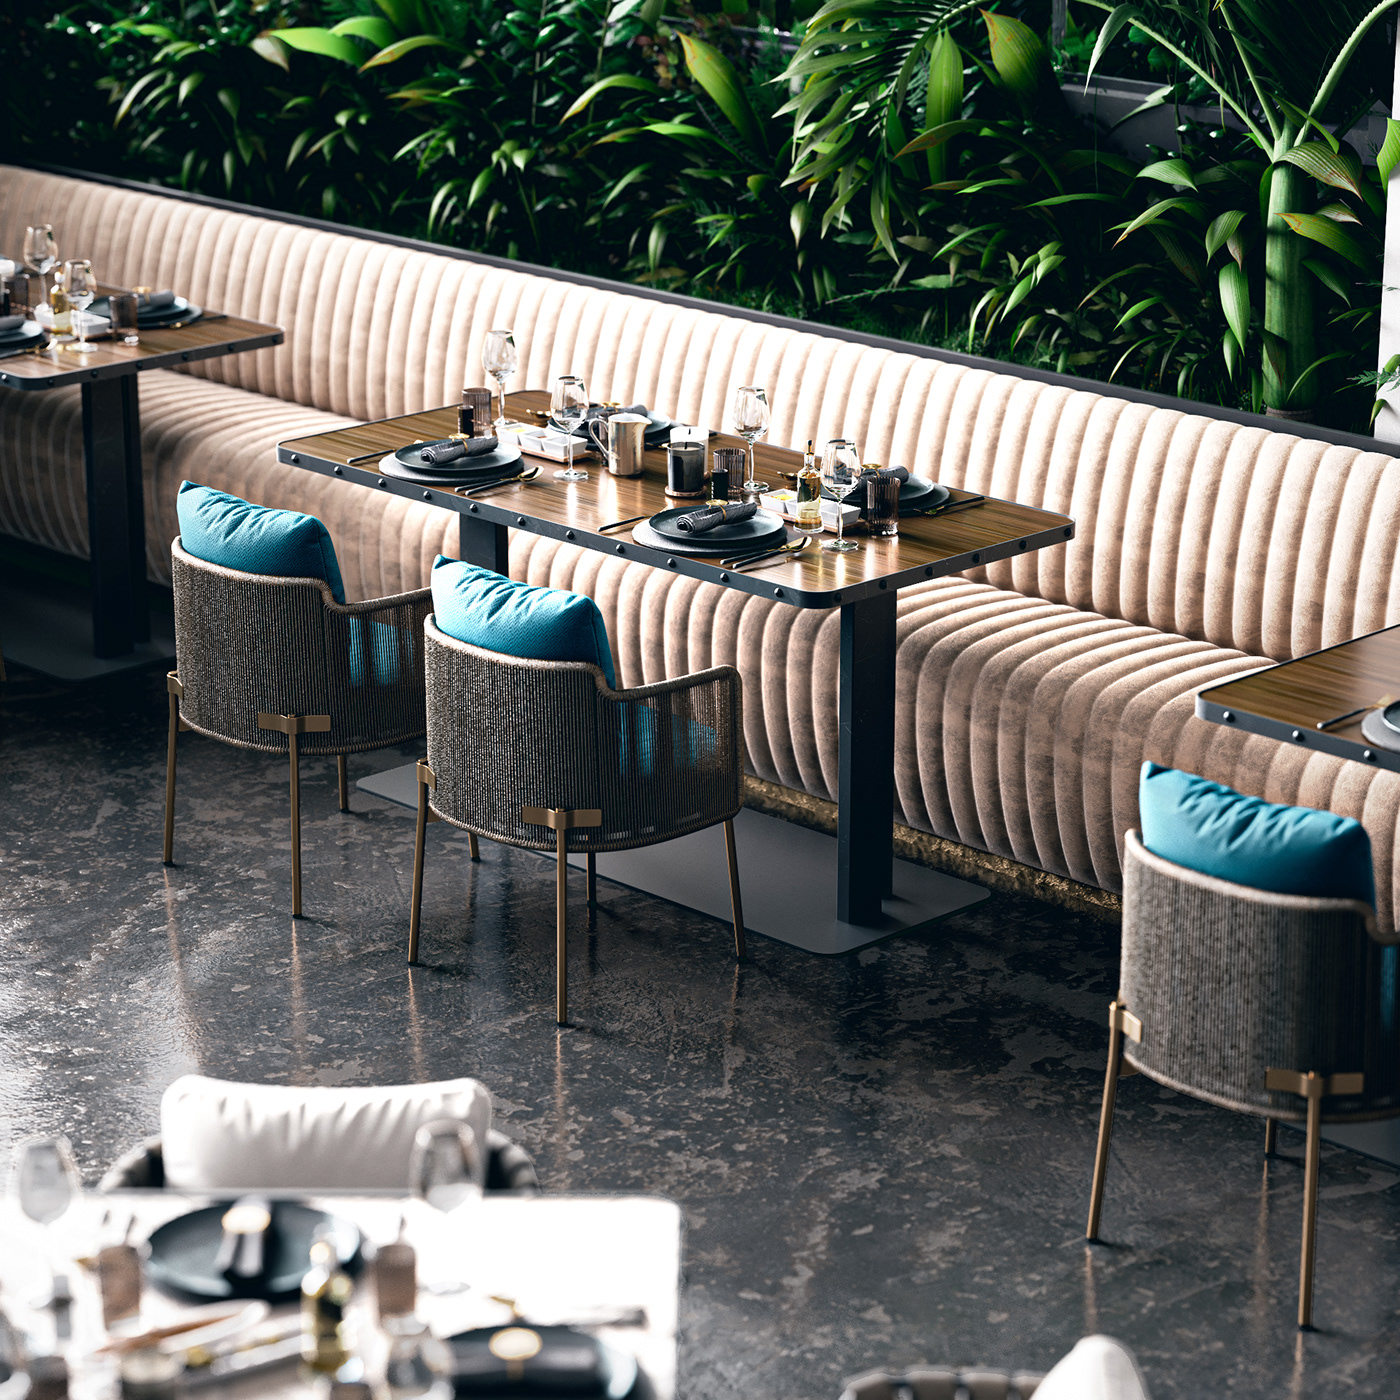 architecture bar cafe design interiordesign lighting modern restaurant visualization